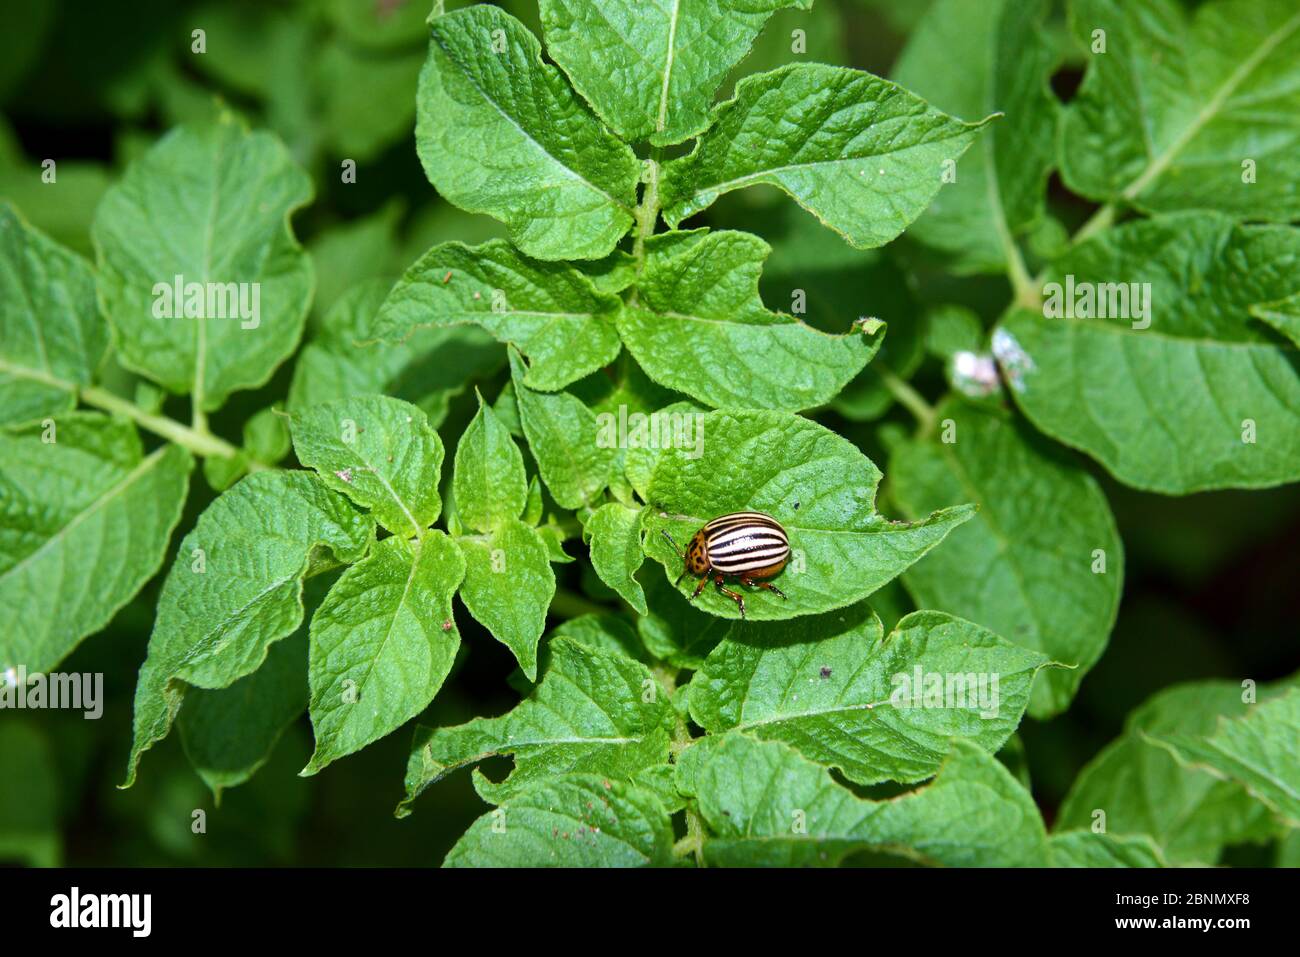 Colorado potato beetle (Leptinotarsa decemlineata) on Potato (Solanum tuberosum) leaves, Romania. Stock Photo